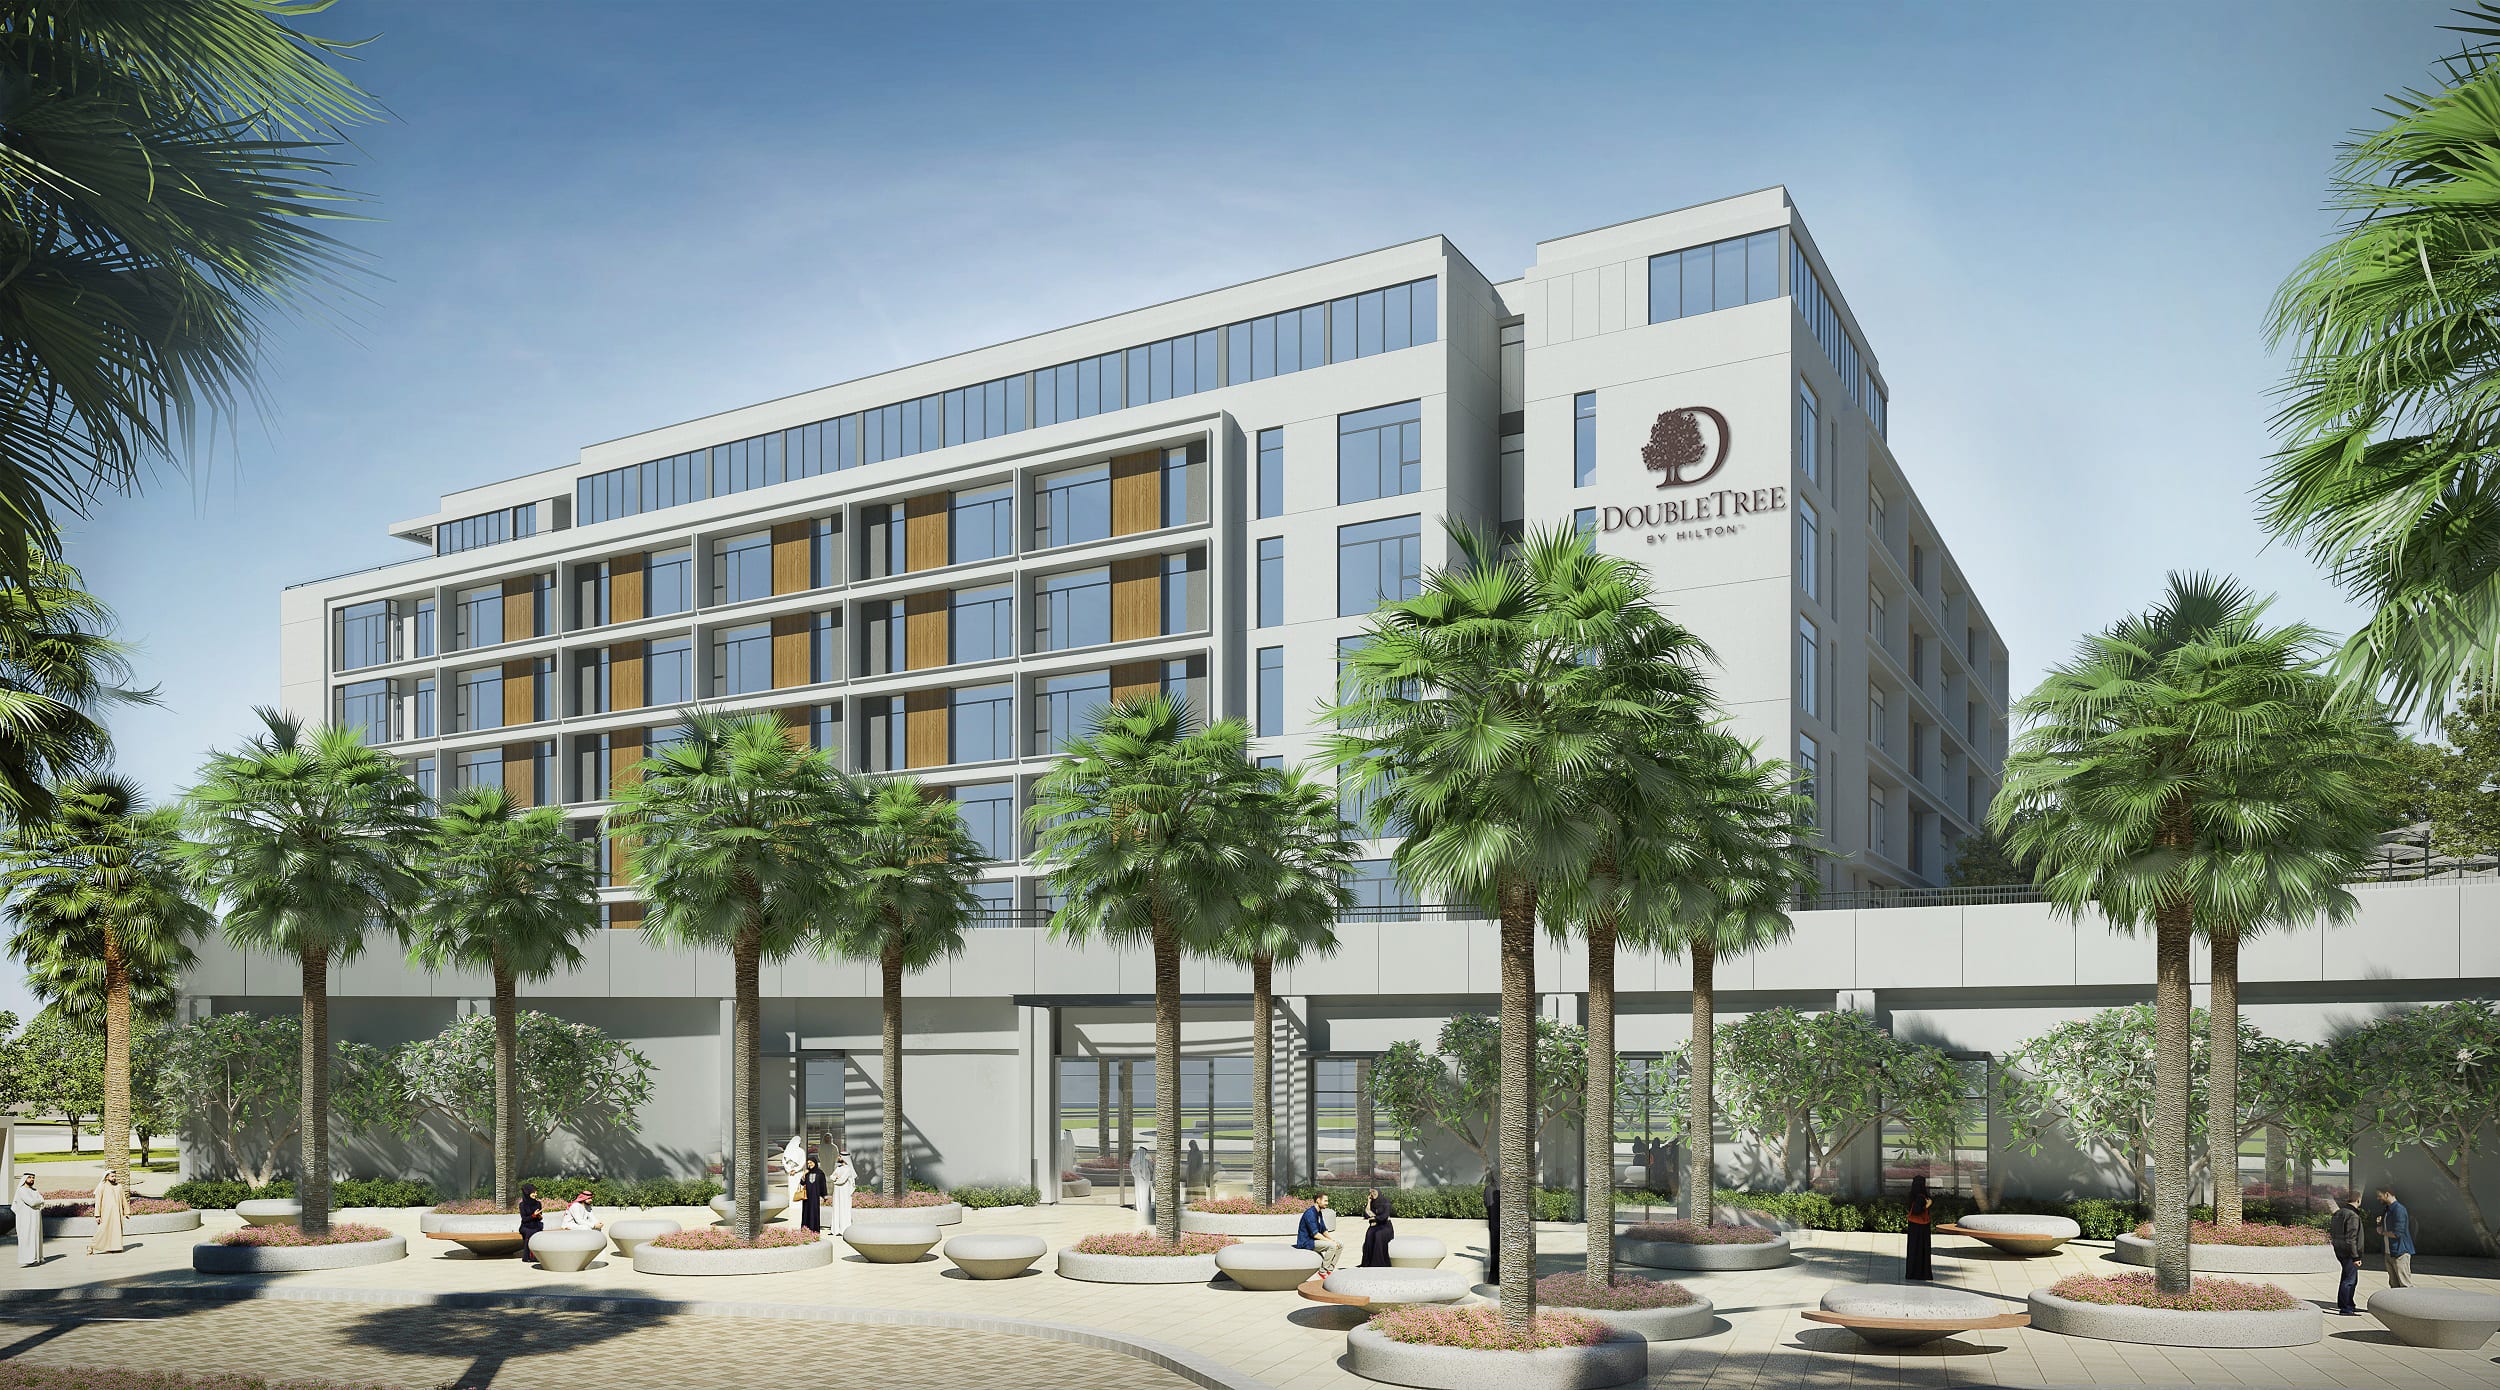 Hilton signs to bring Curio brand to Yas Island in Abu Dhabi